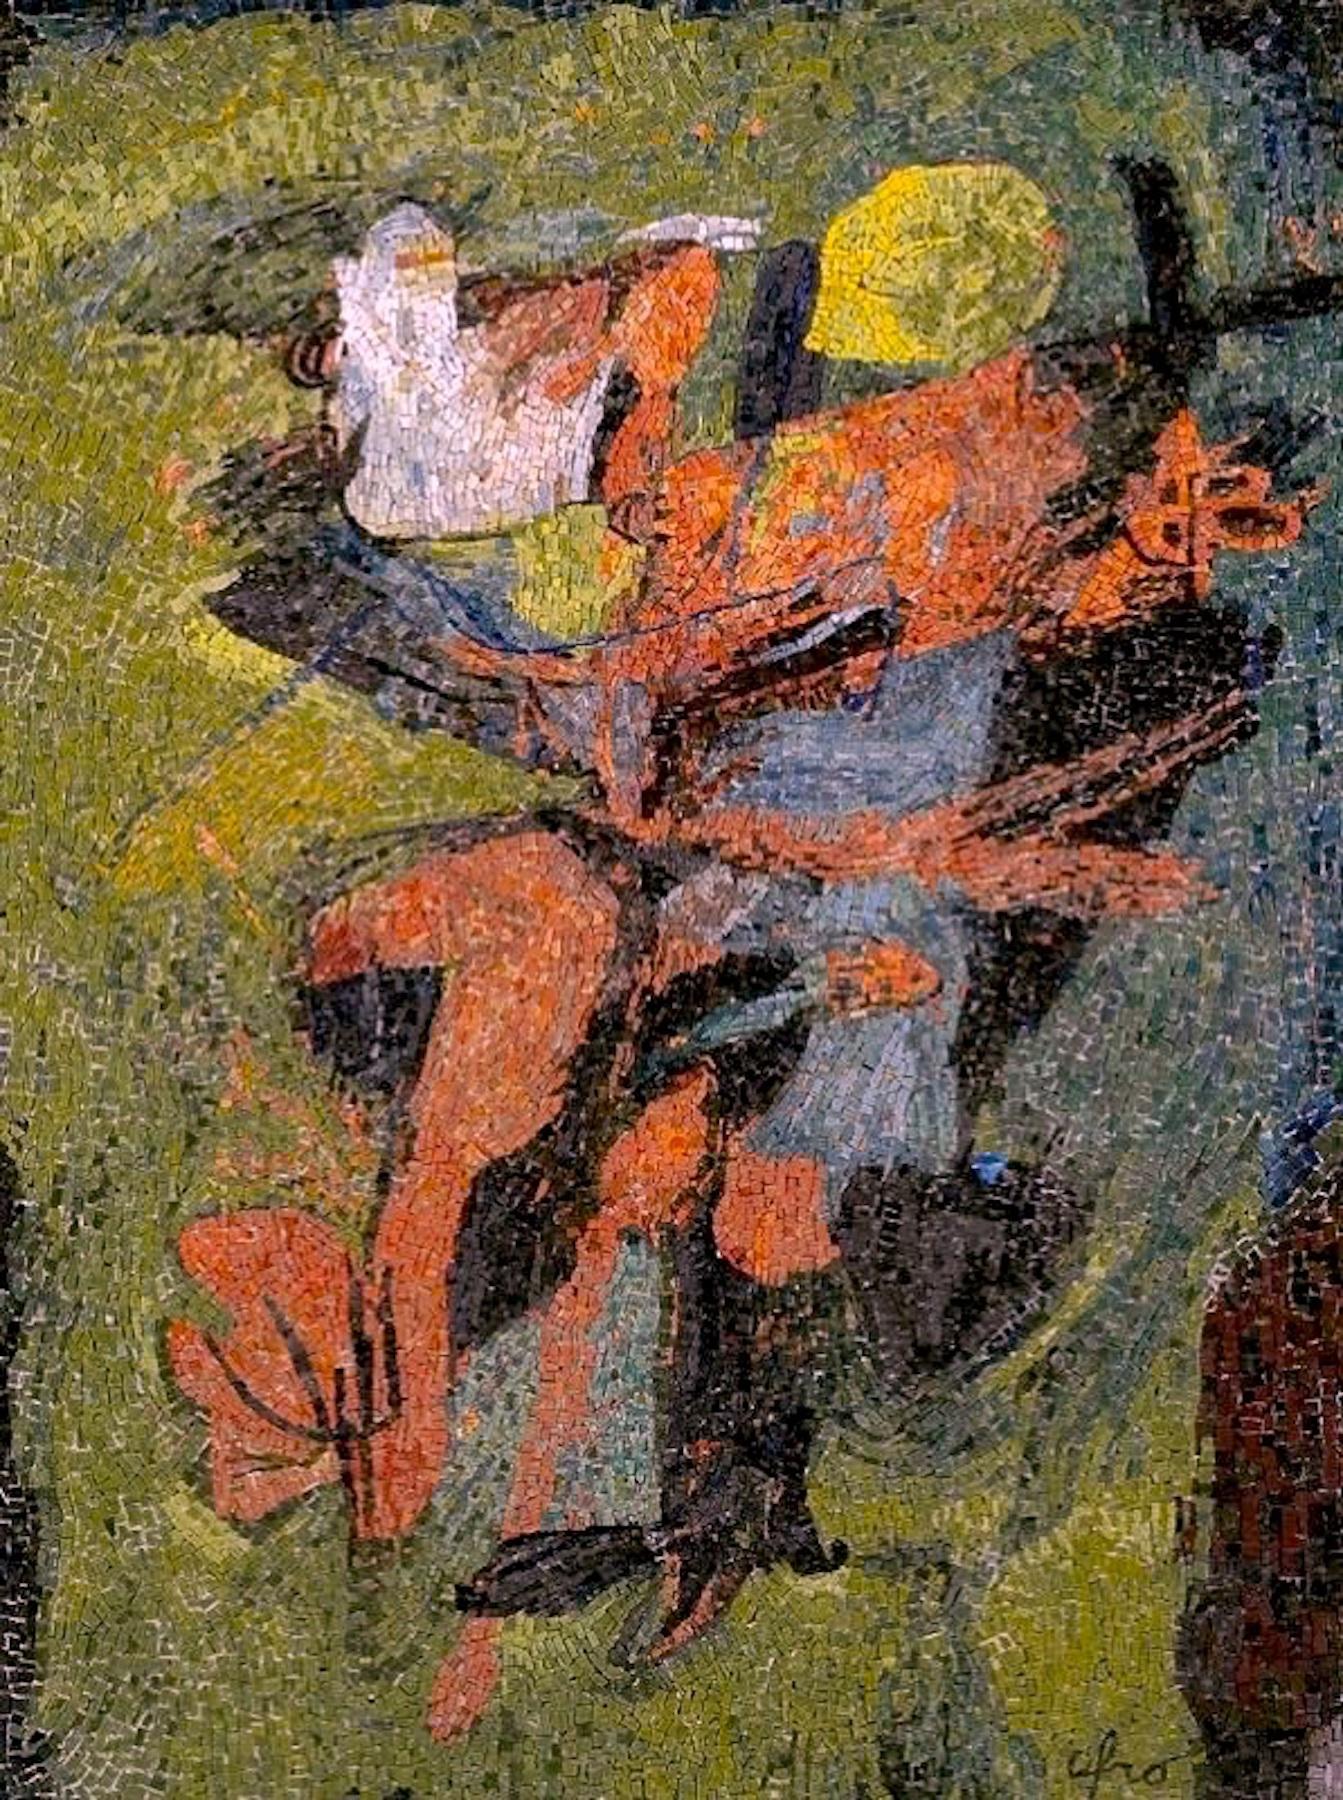 Boy with Turkey - Mosaic by Afro Basaldella - 1955